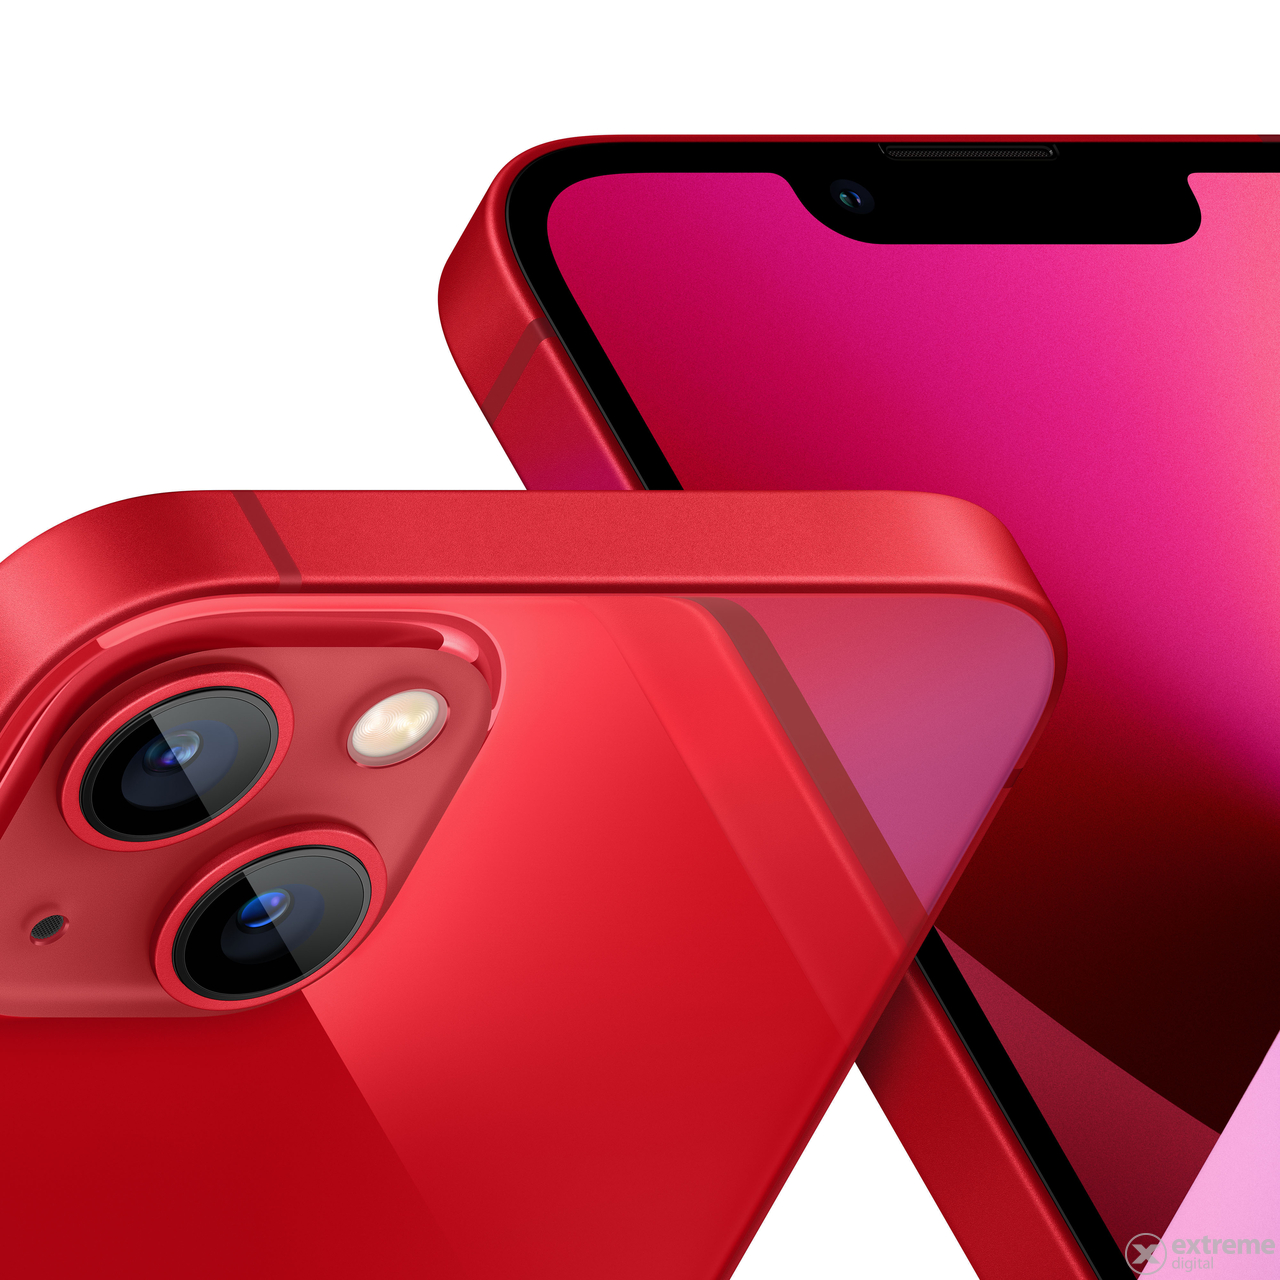 Apple iPhone 13 mini 256GB (mlk83hu/a), (PRODUCT)RED